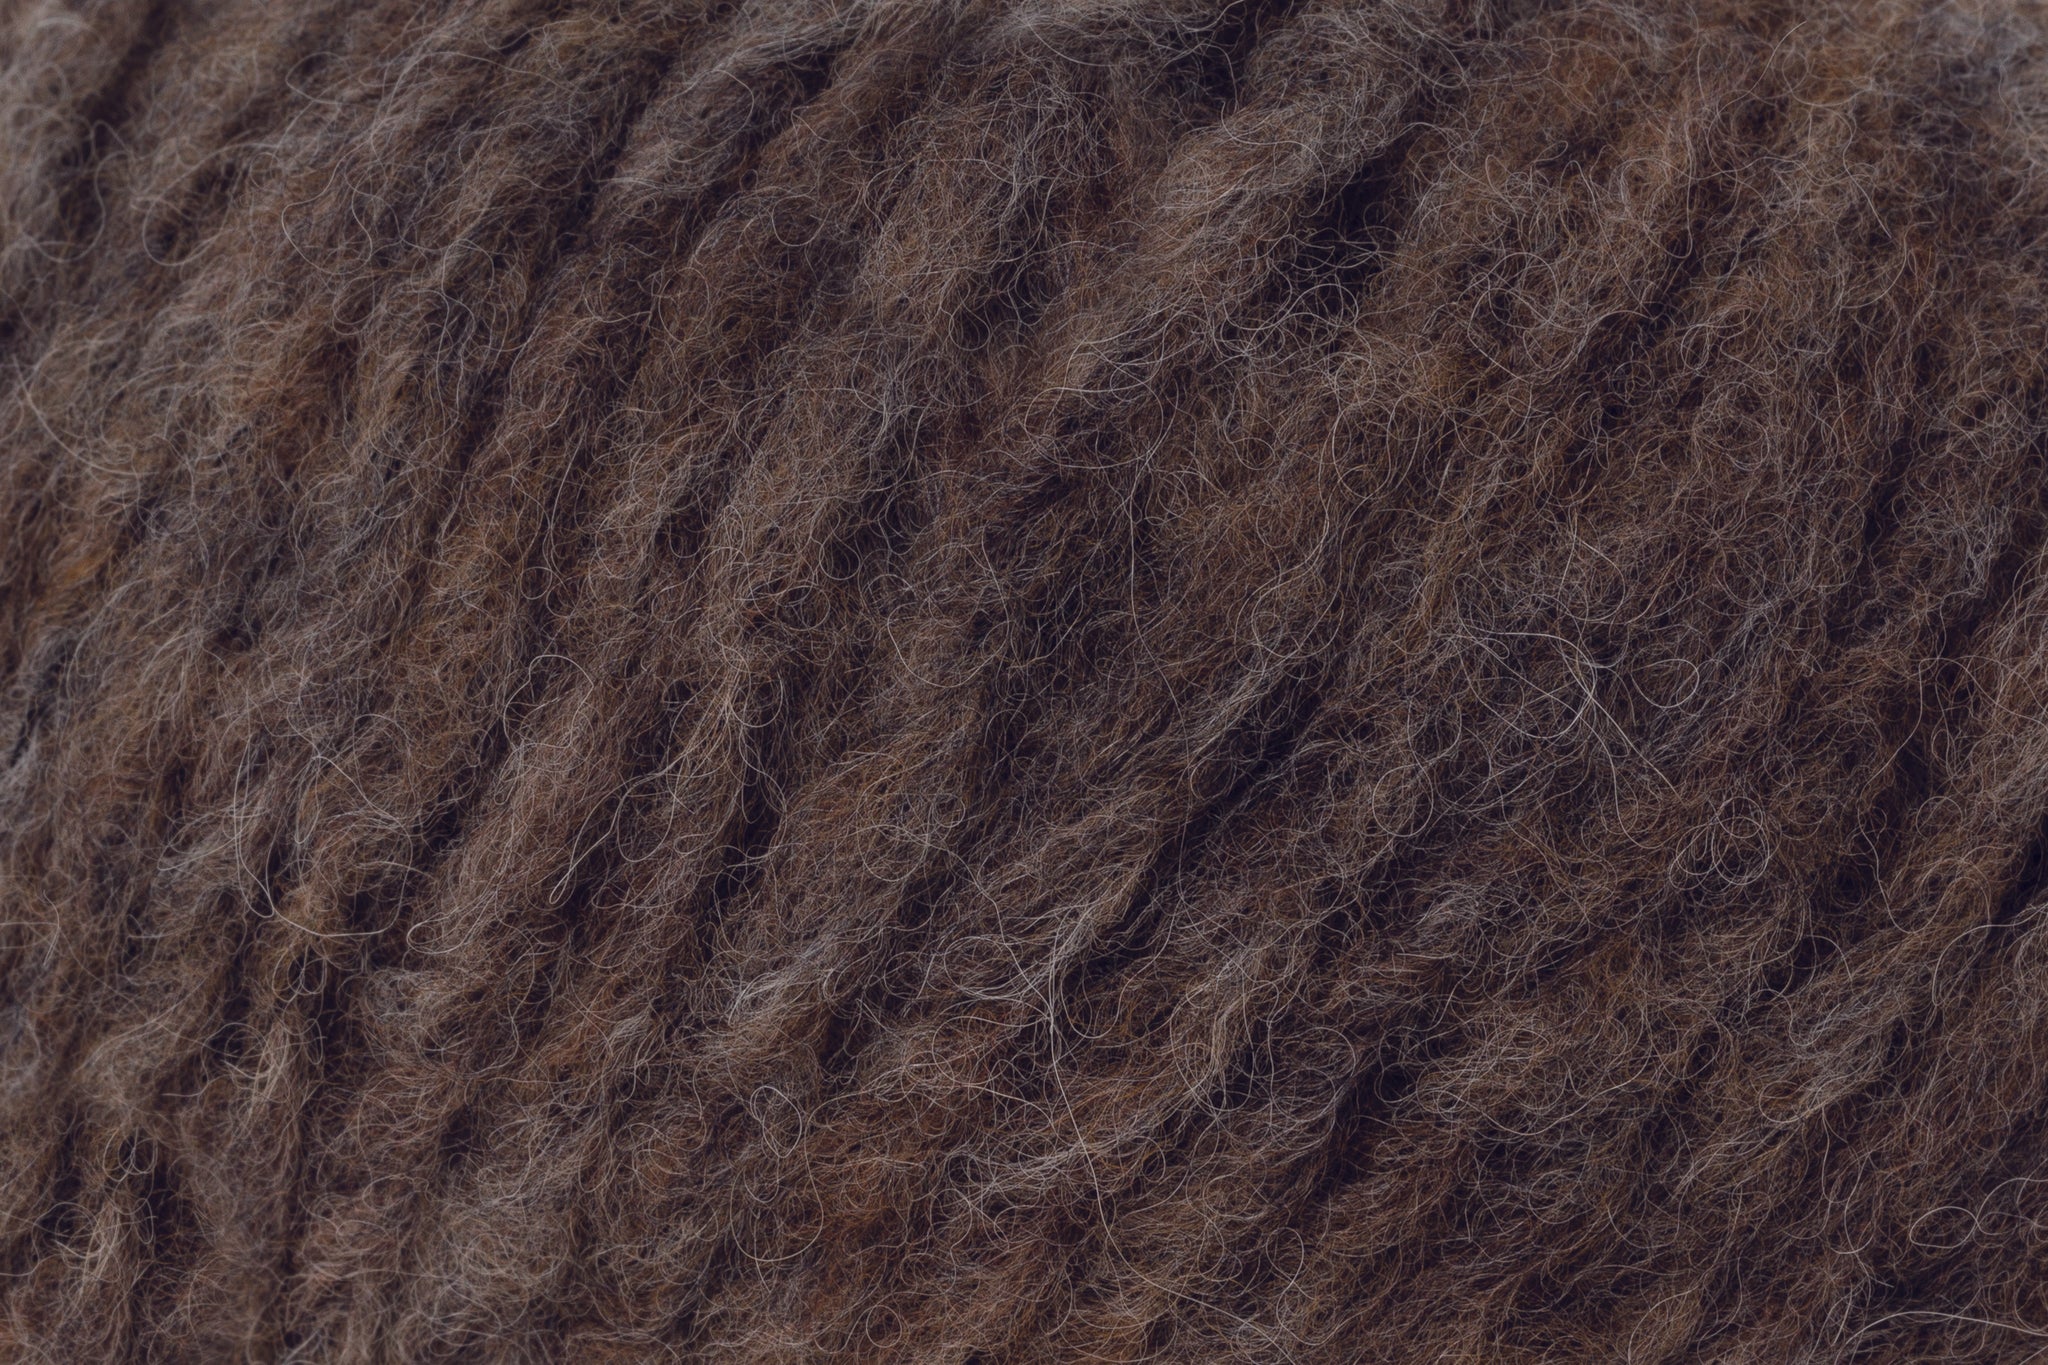 Rowan Brushed Fleece in Tarn-254